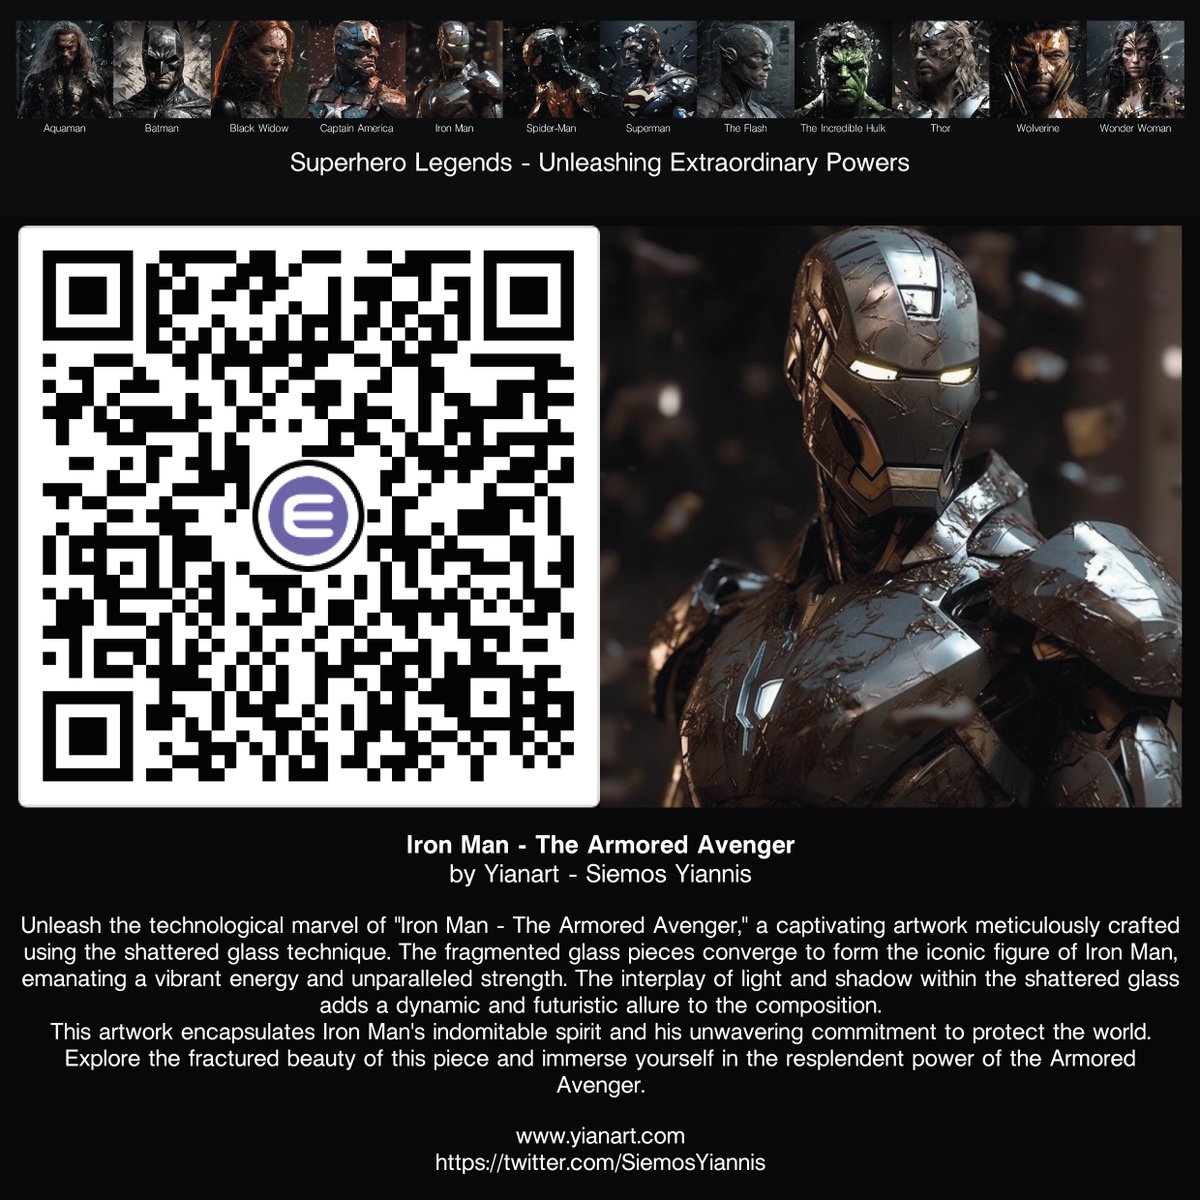 - Superhero Legends - Unleashing Extraordinary Powers - 
Iron Man - The Armored Avenger

Claim Now!
beta.nft.io/beam/claim/369…

#nft #nftart #nfts #nftart #nftartist #nftartists #nftartwork #nftartcollector